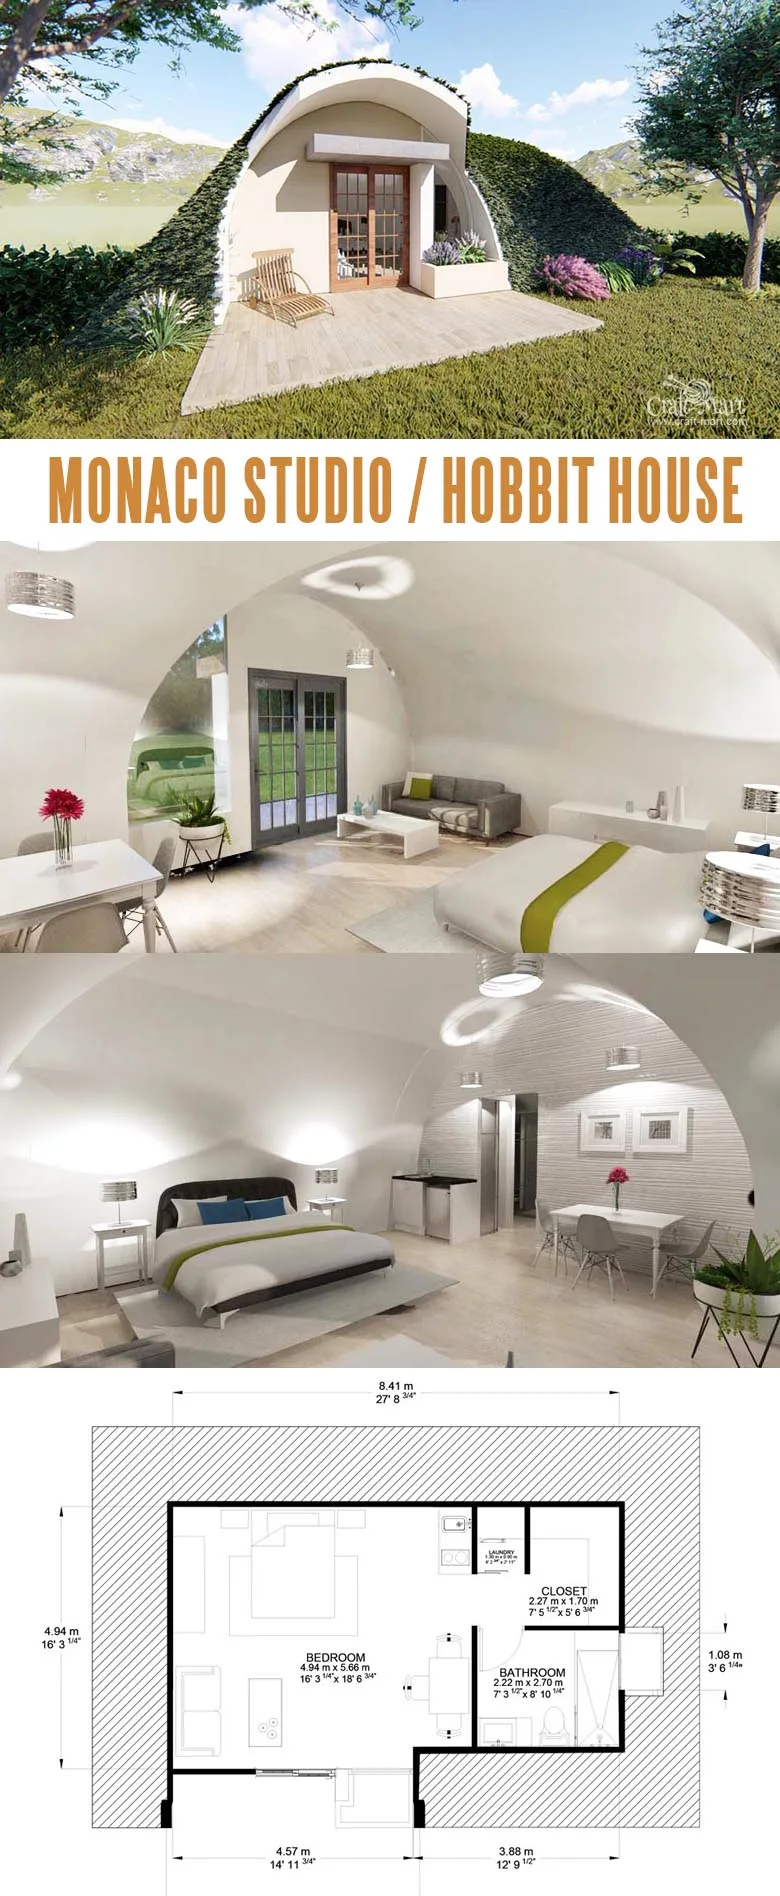 Monaco Studio (Tiny Hobbit House). Modular units can be interconnected creating luxury Hobbit estates.